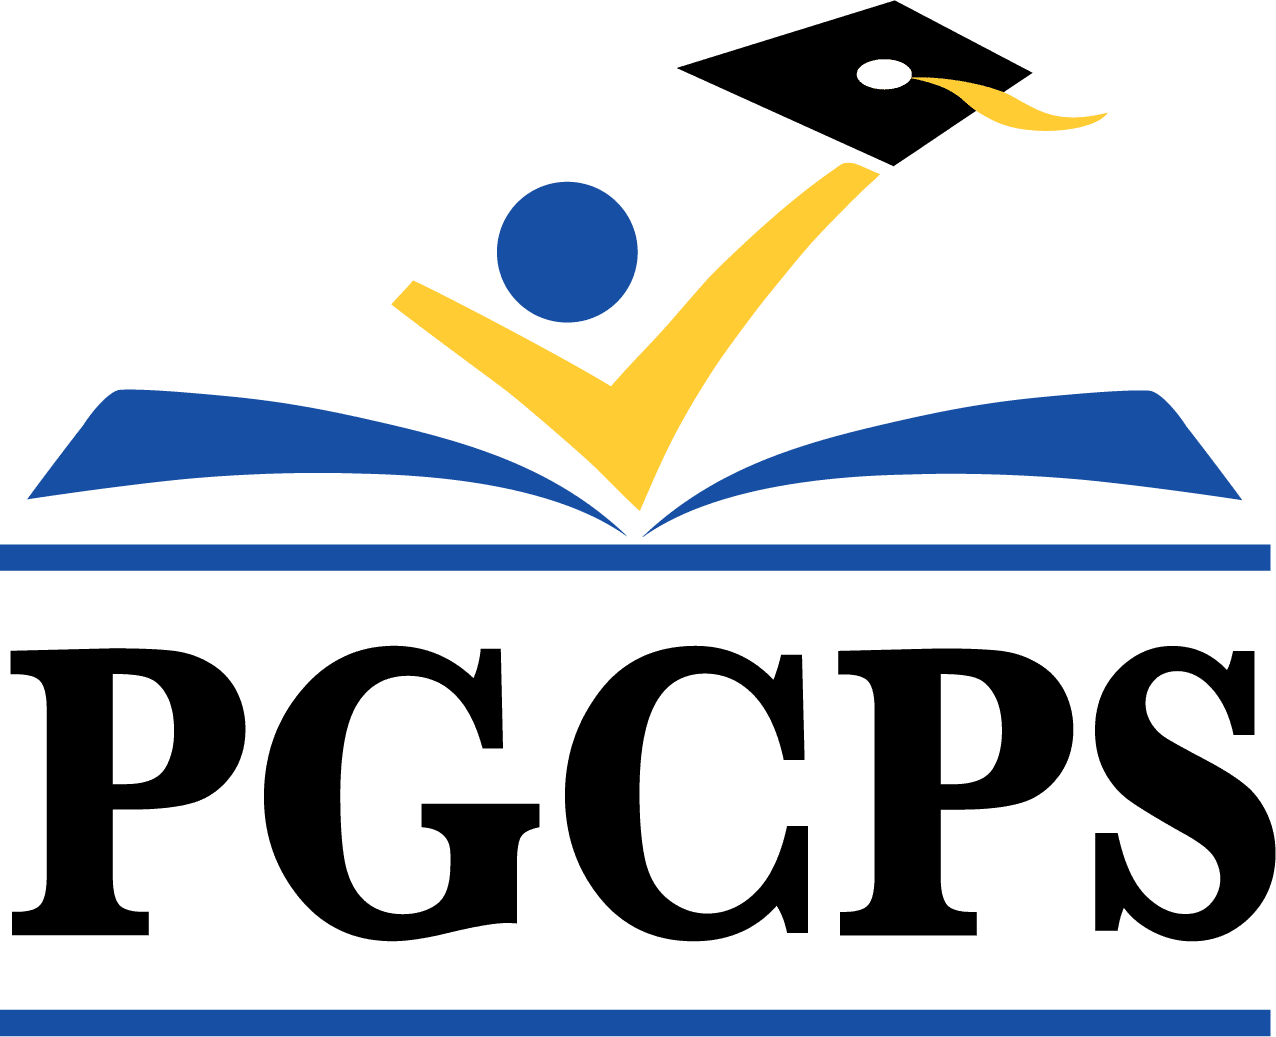 PGCPS logo